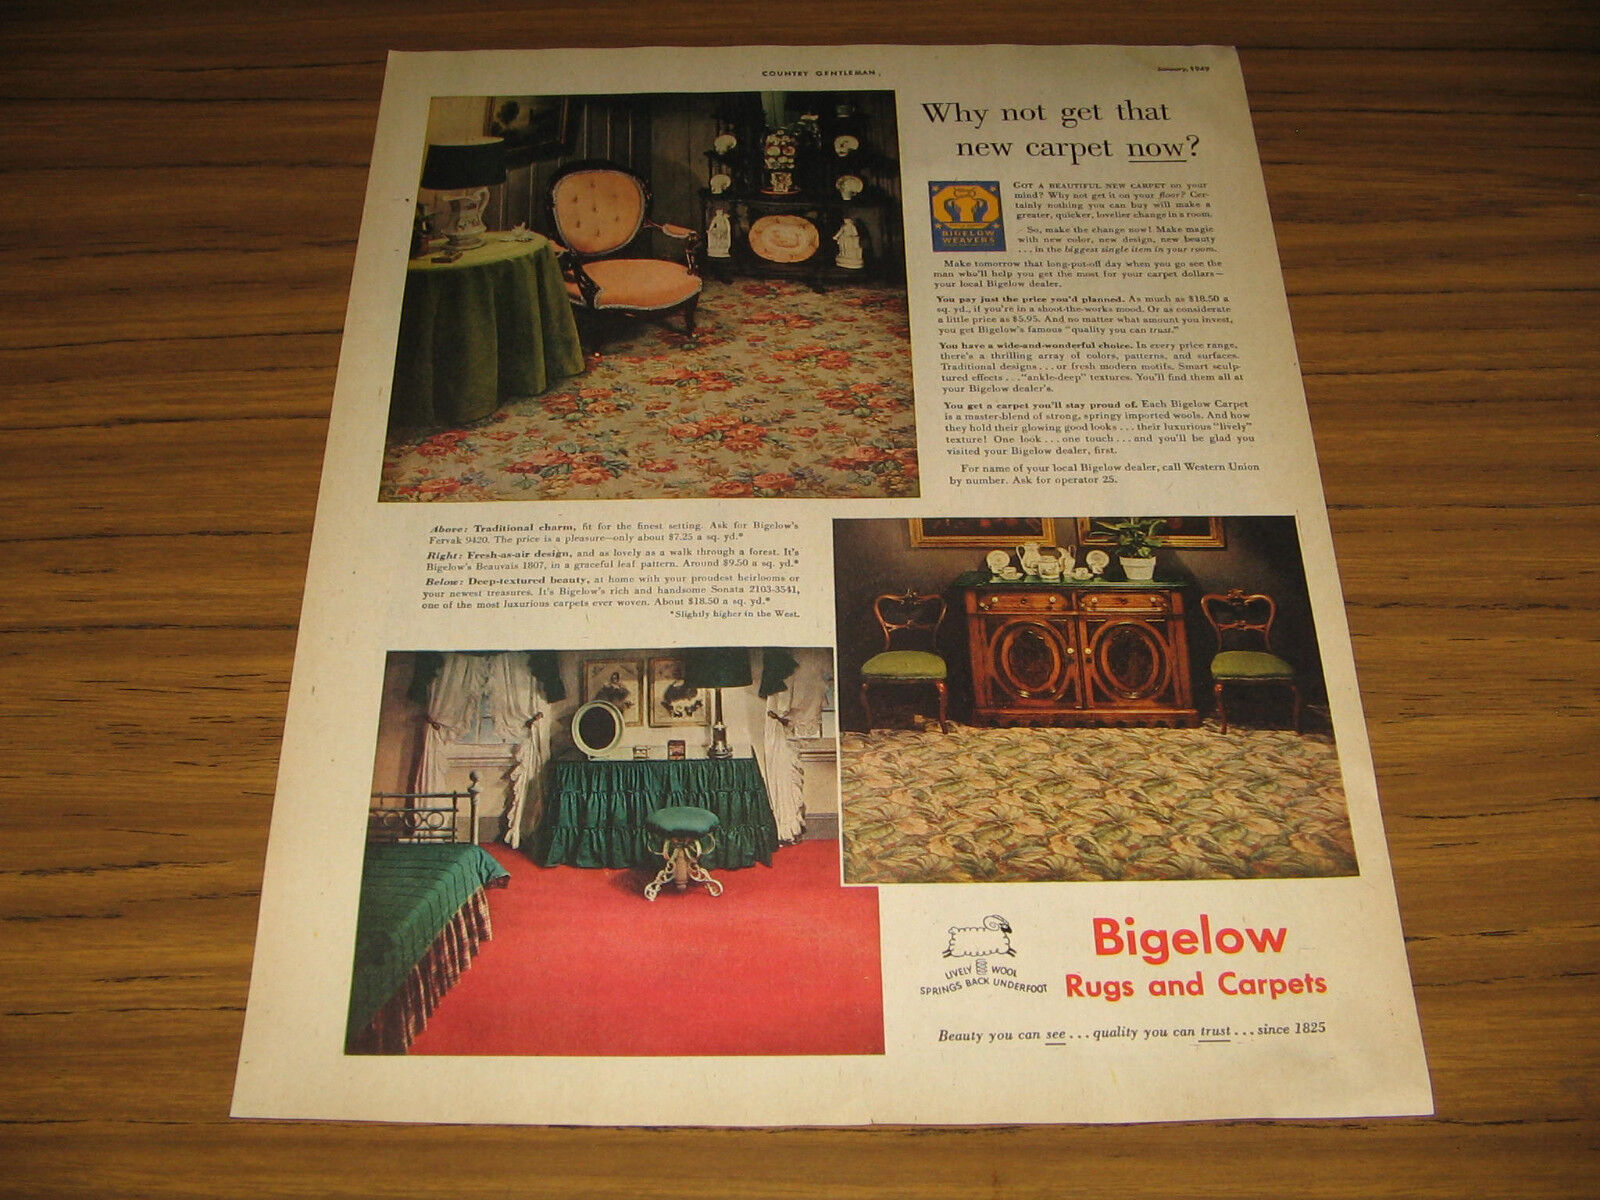 1949 Vintage Ad Bigelow Rugs & Carpets New Carpet Now?